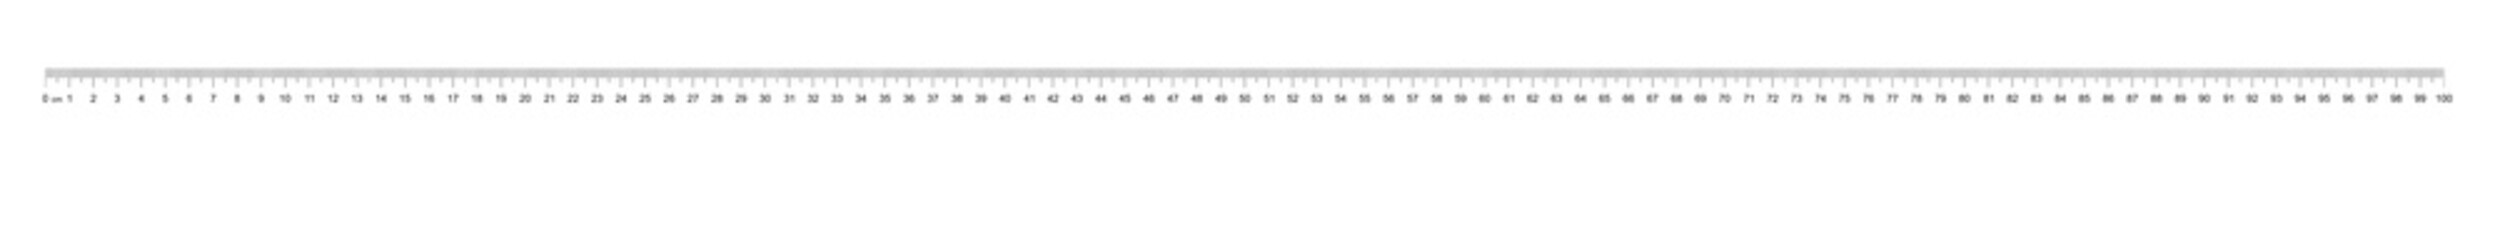 Ruler 100 cm. Measuring tool. Ruler scale 1 meter. Ruler grid 100 cm. Size indicator units. Metric Centimeter size indicators. Vector